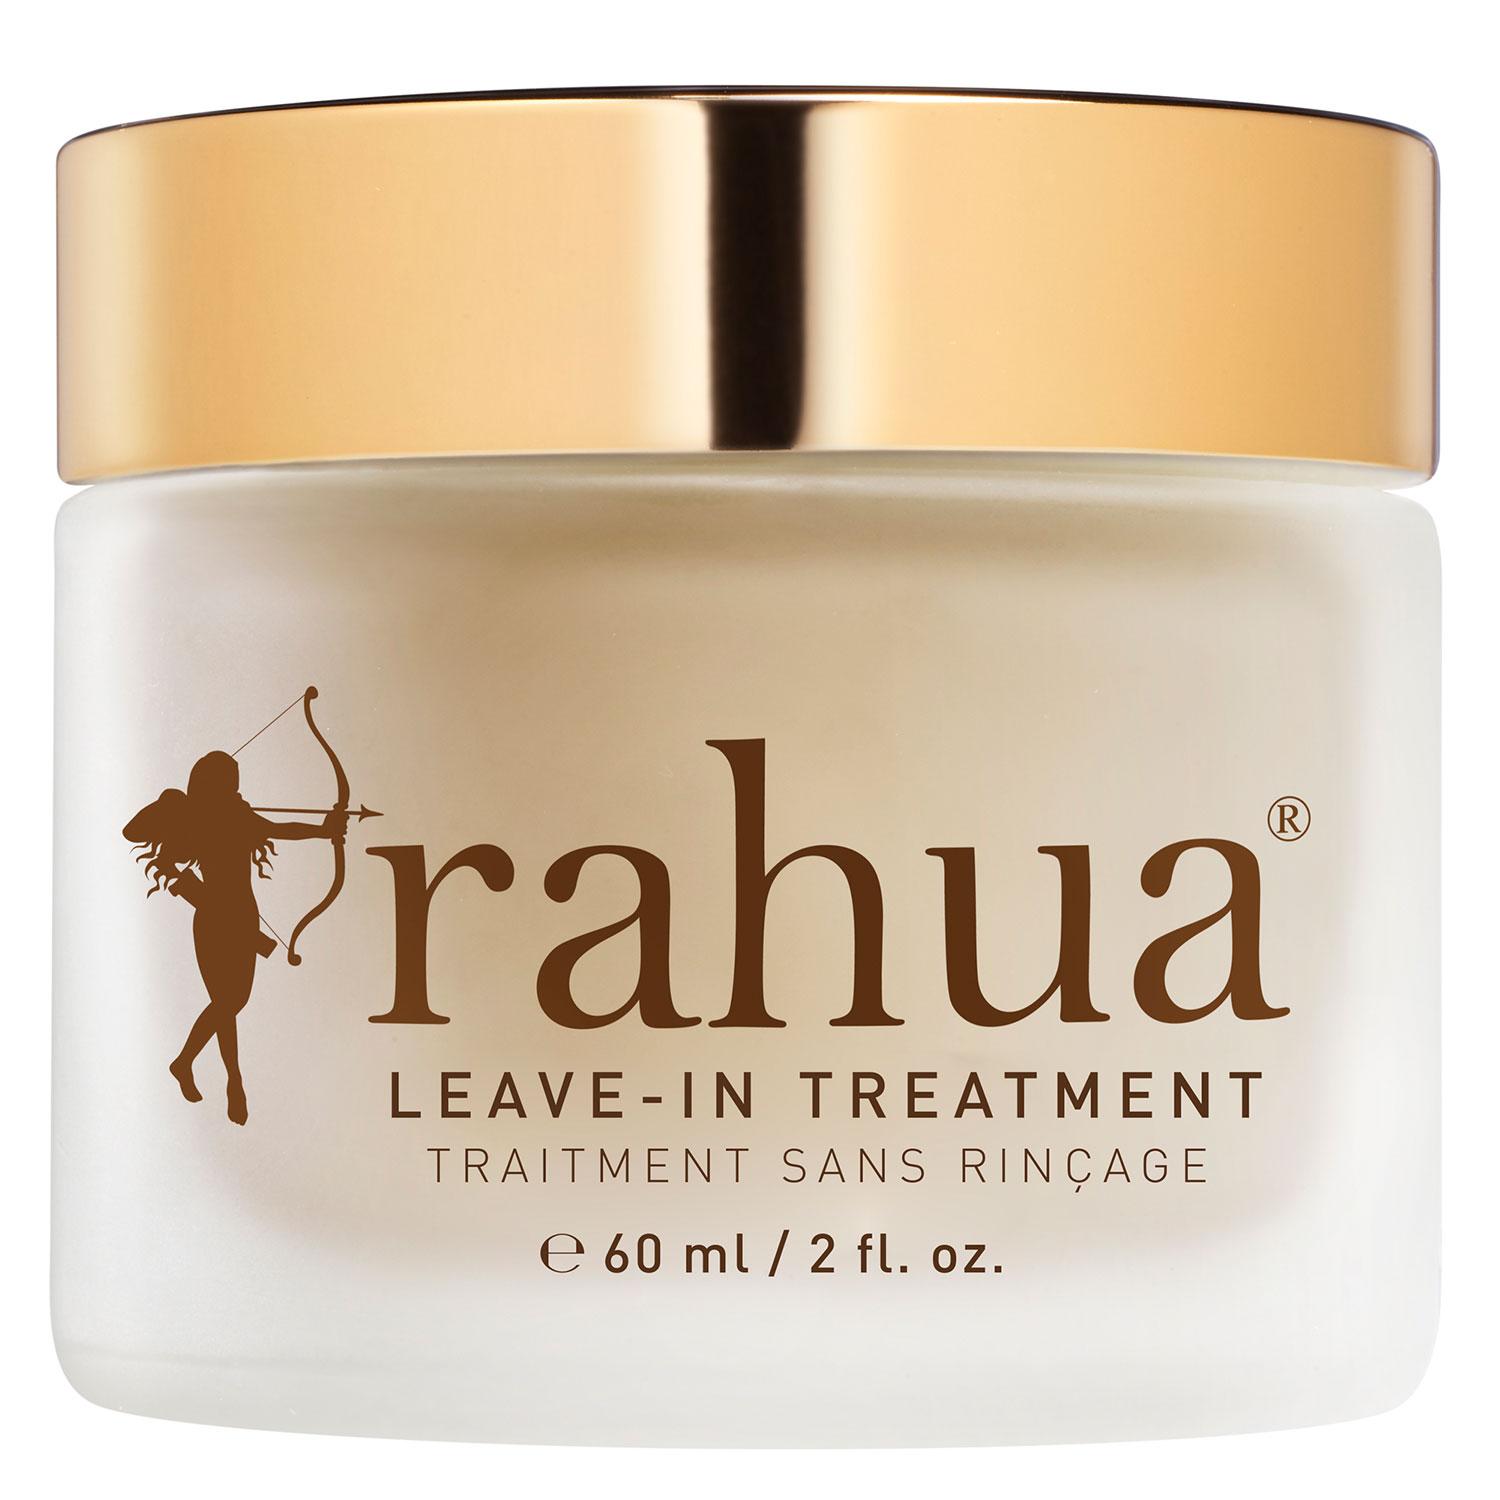 Rahua Treatment - Leave-In Treatment